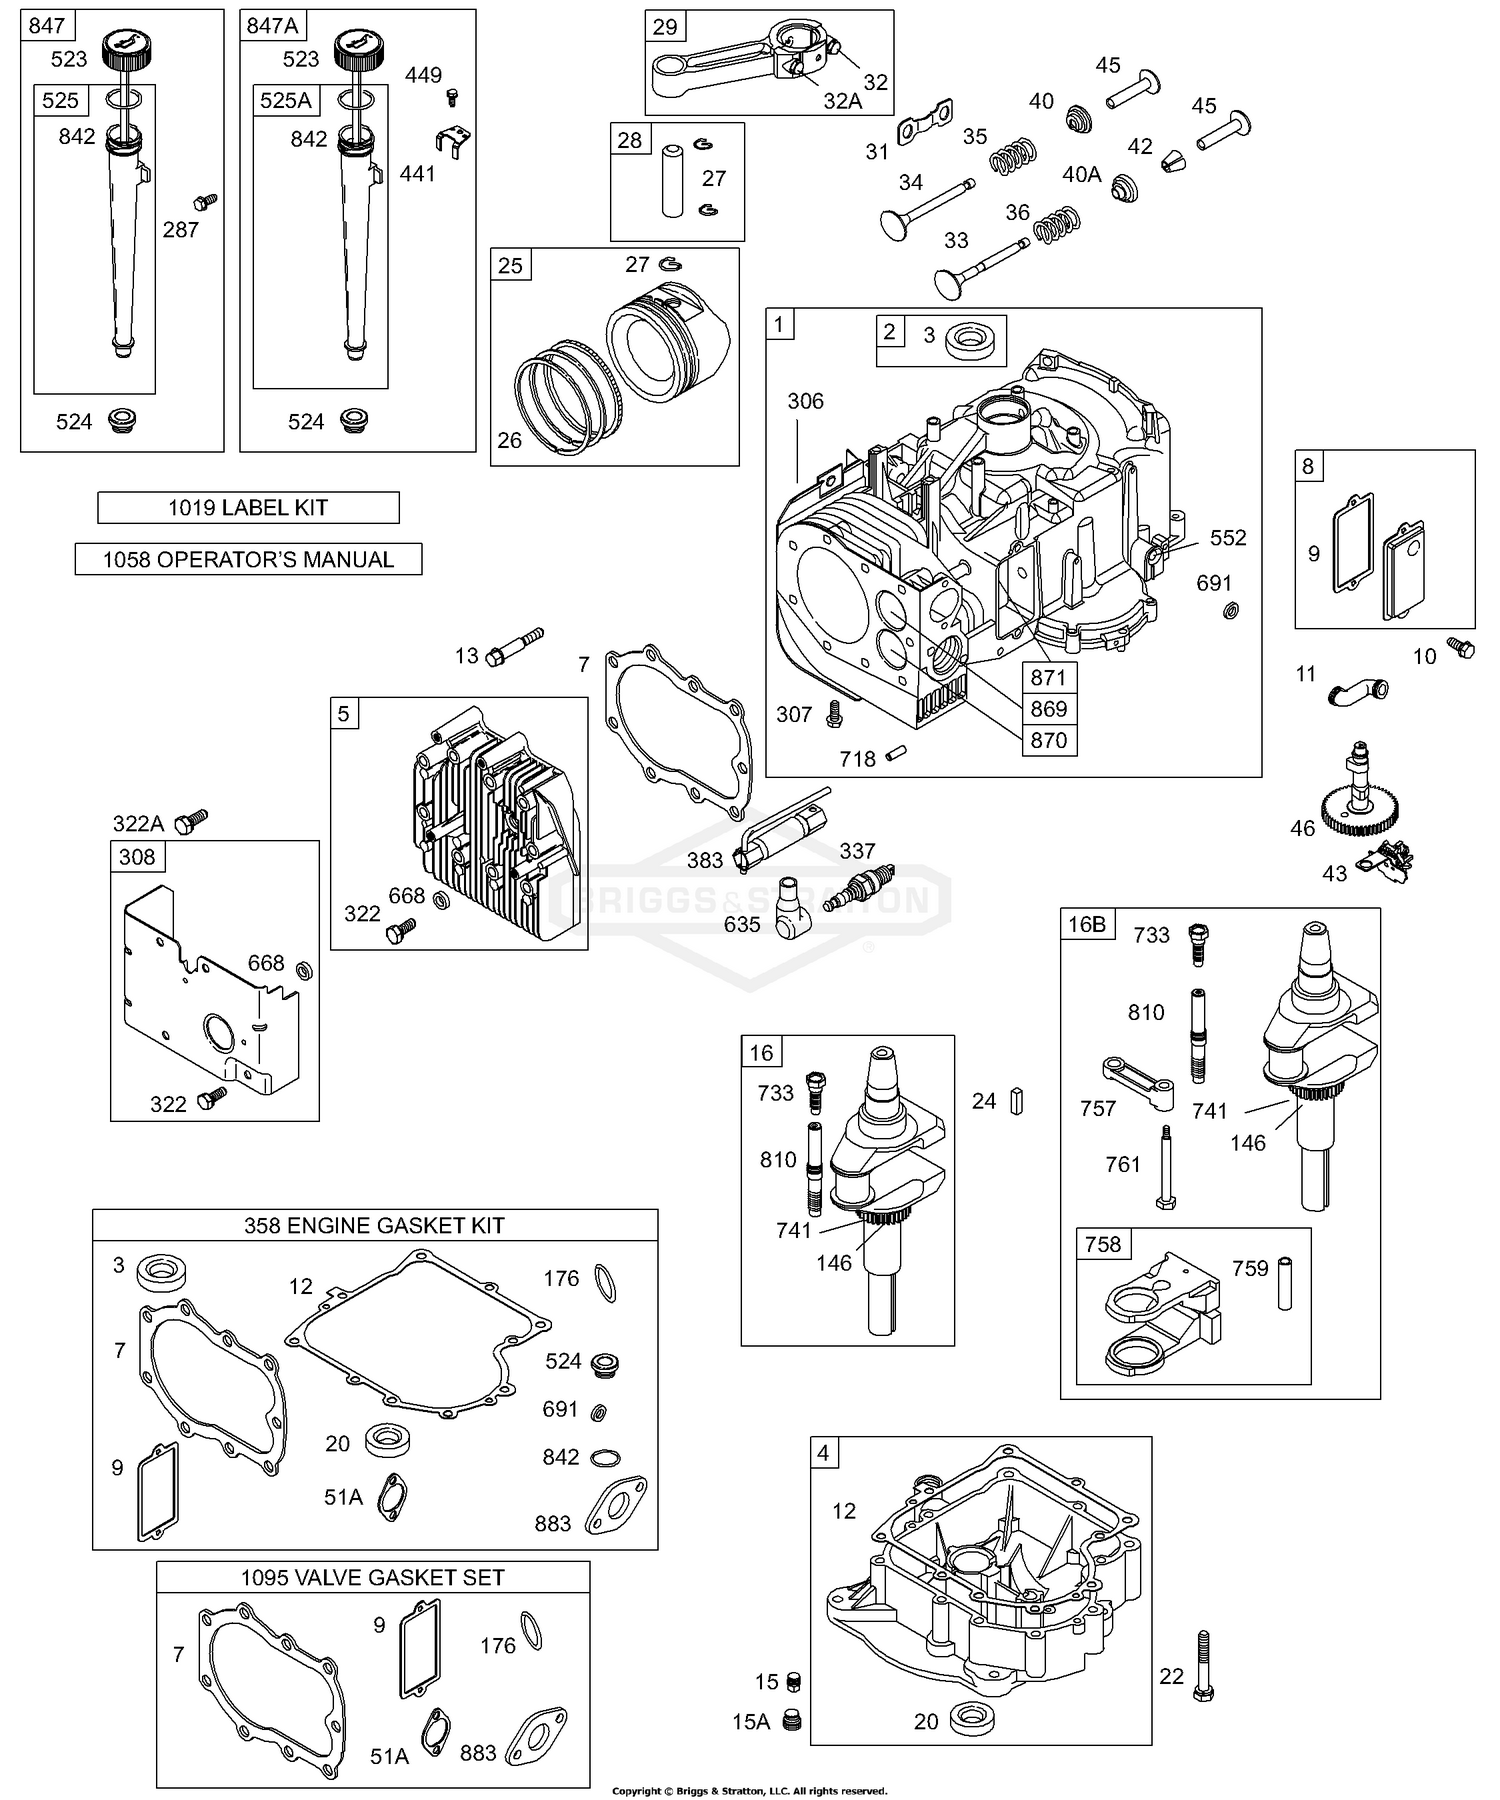 BS-231218 BRIGGS Guide Intake Valve 231218 Briggs & Stratton Engine Parts